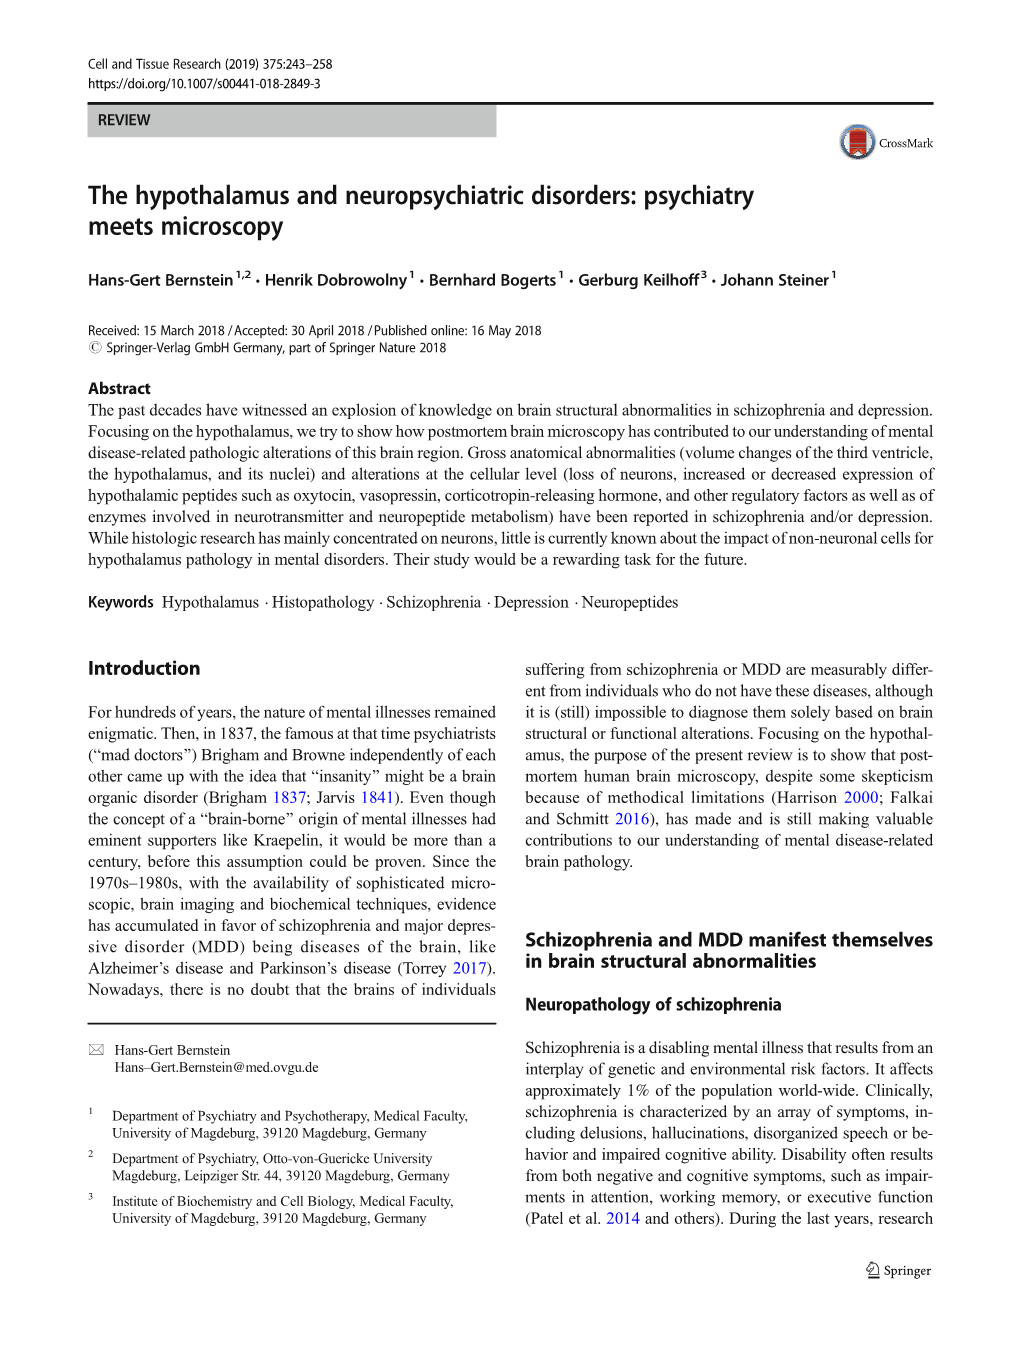 The Hypothalamus and Neuropsychiatric Disorders: Psychiatry Meets Microscopy